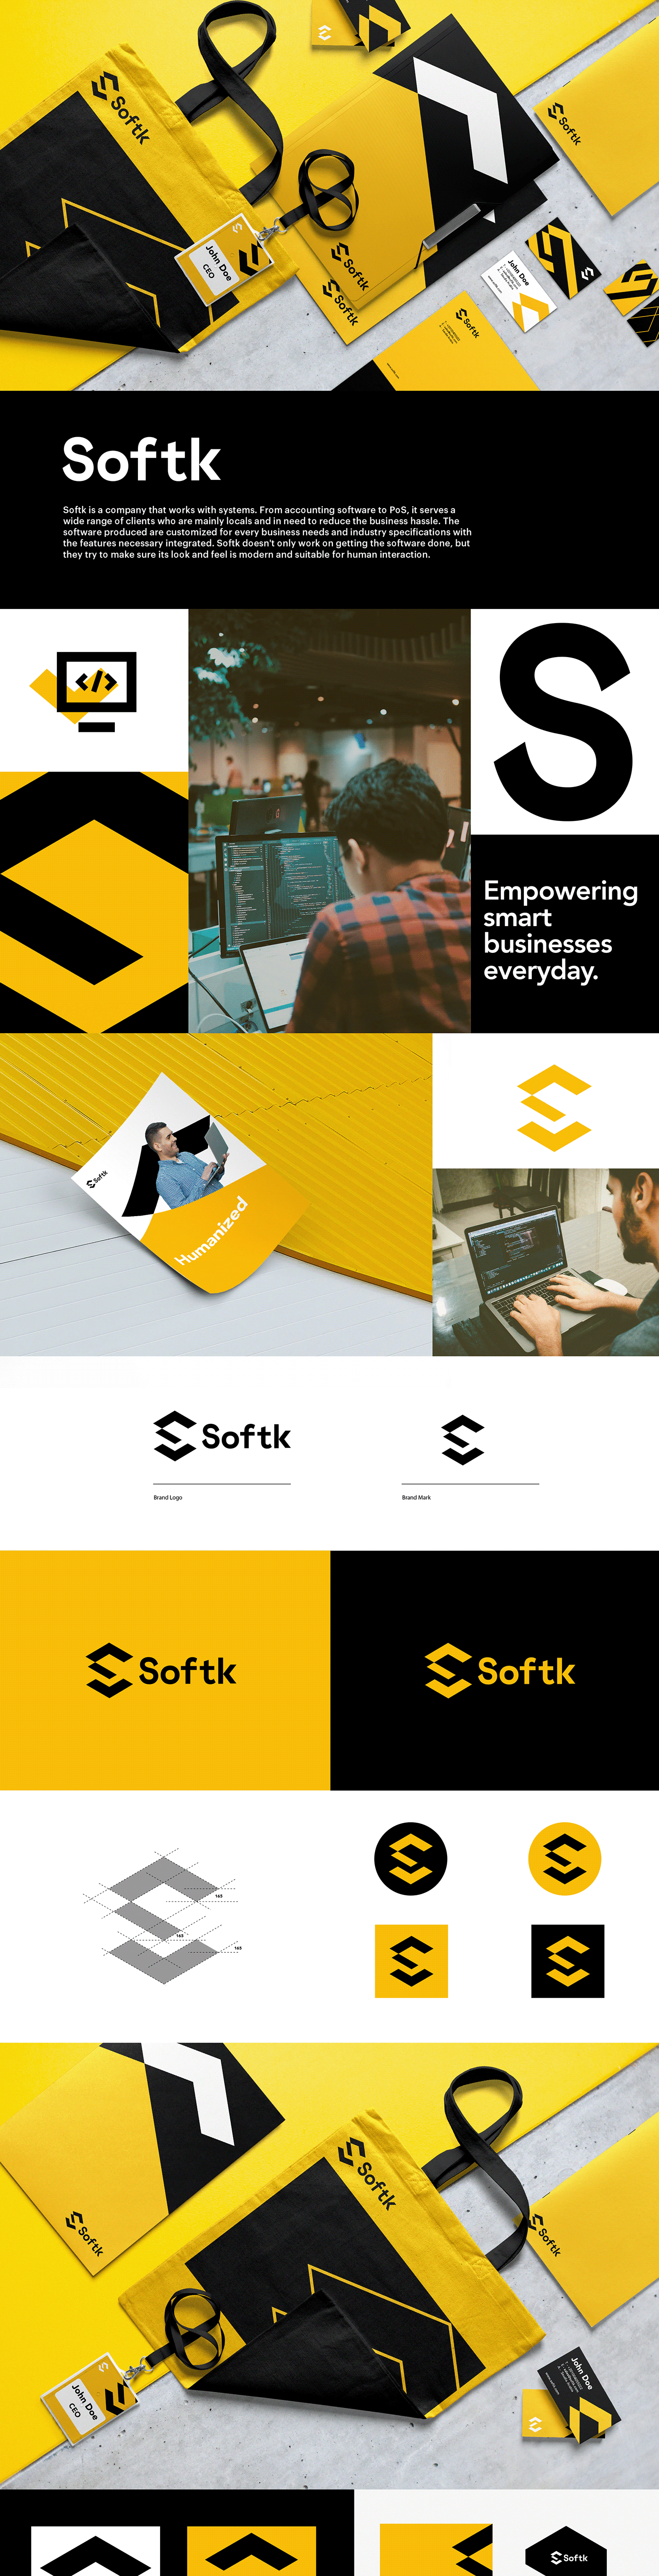 software development code Technology company visual logo design identity